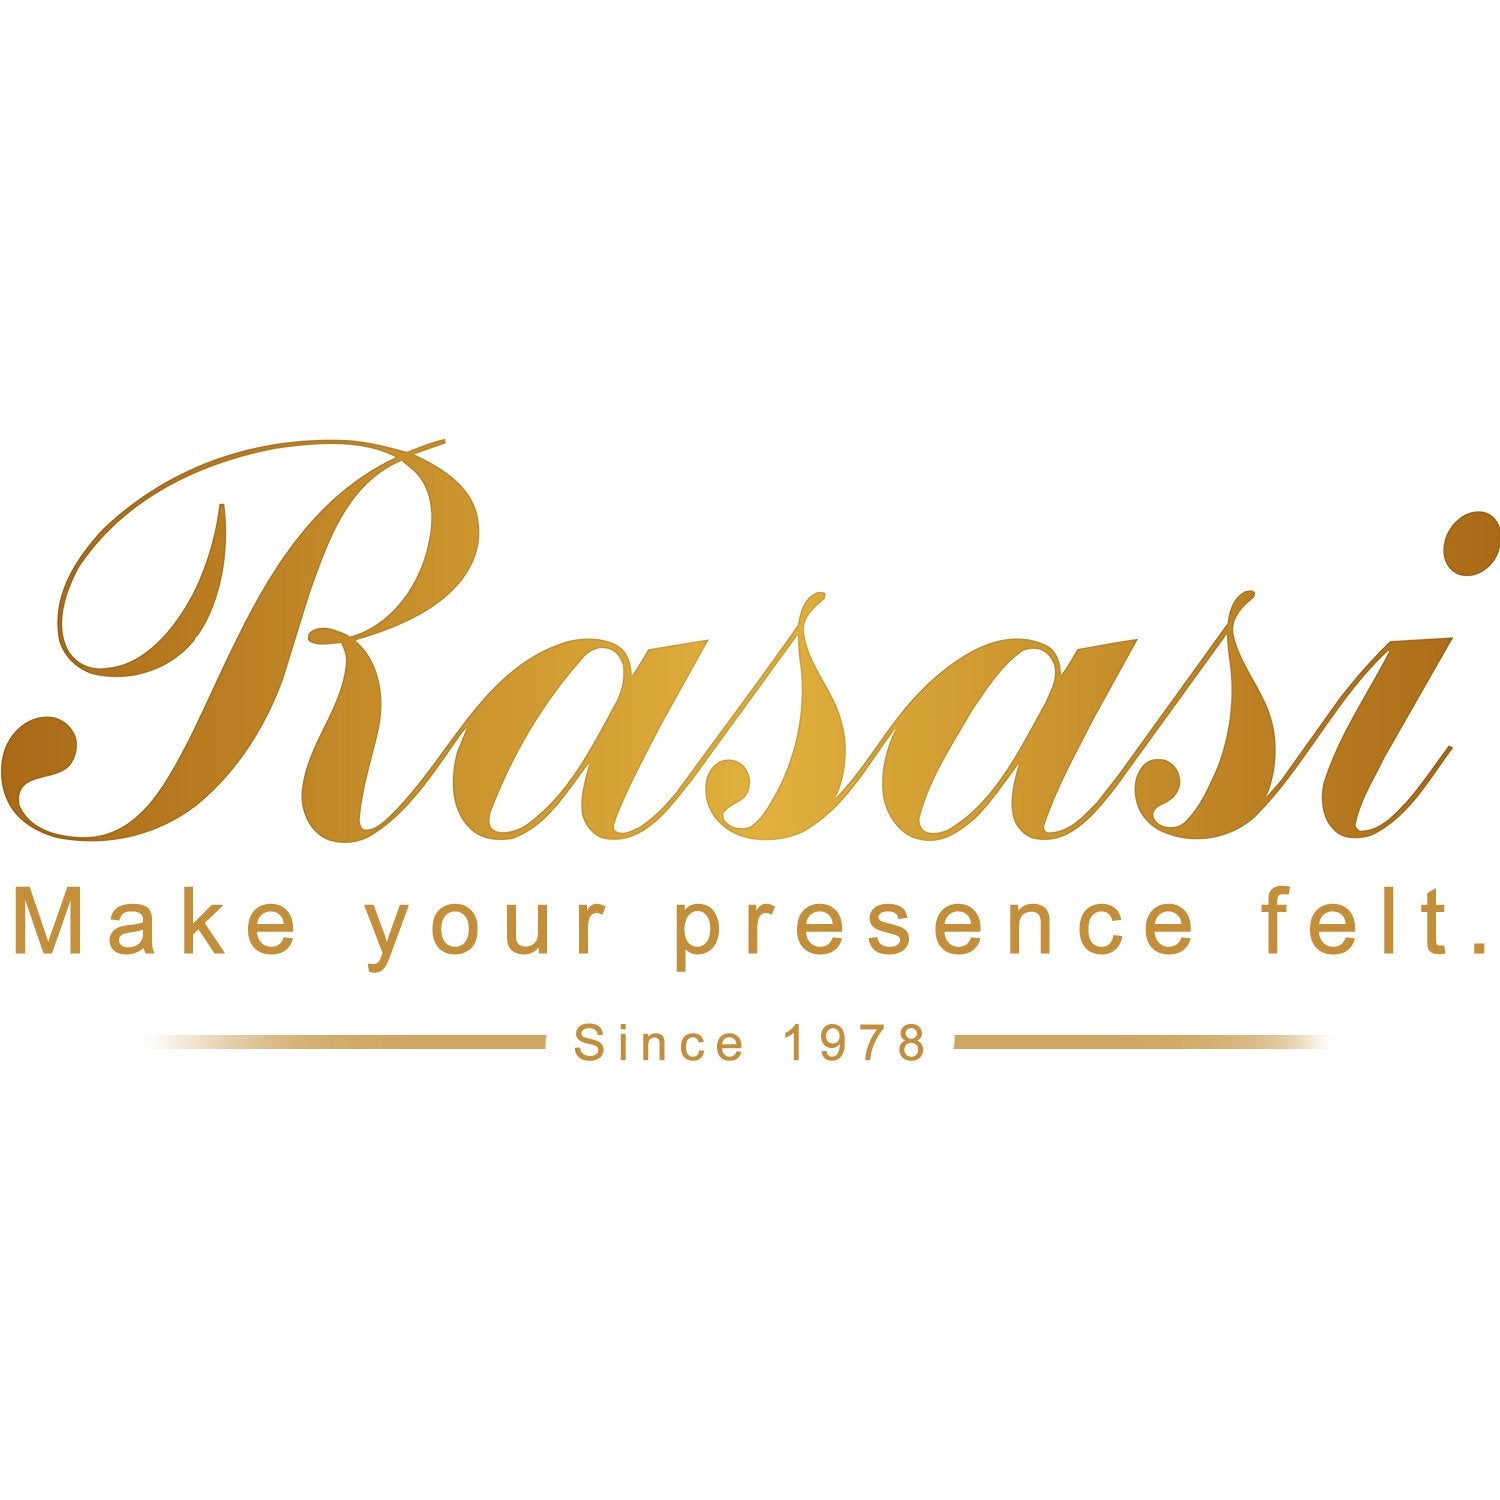 RASASI Daarej Men EDP 100ML (3.4oz) Perfume for Every Occasion. (MEN)